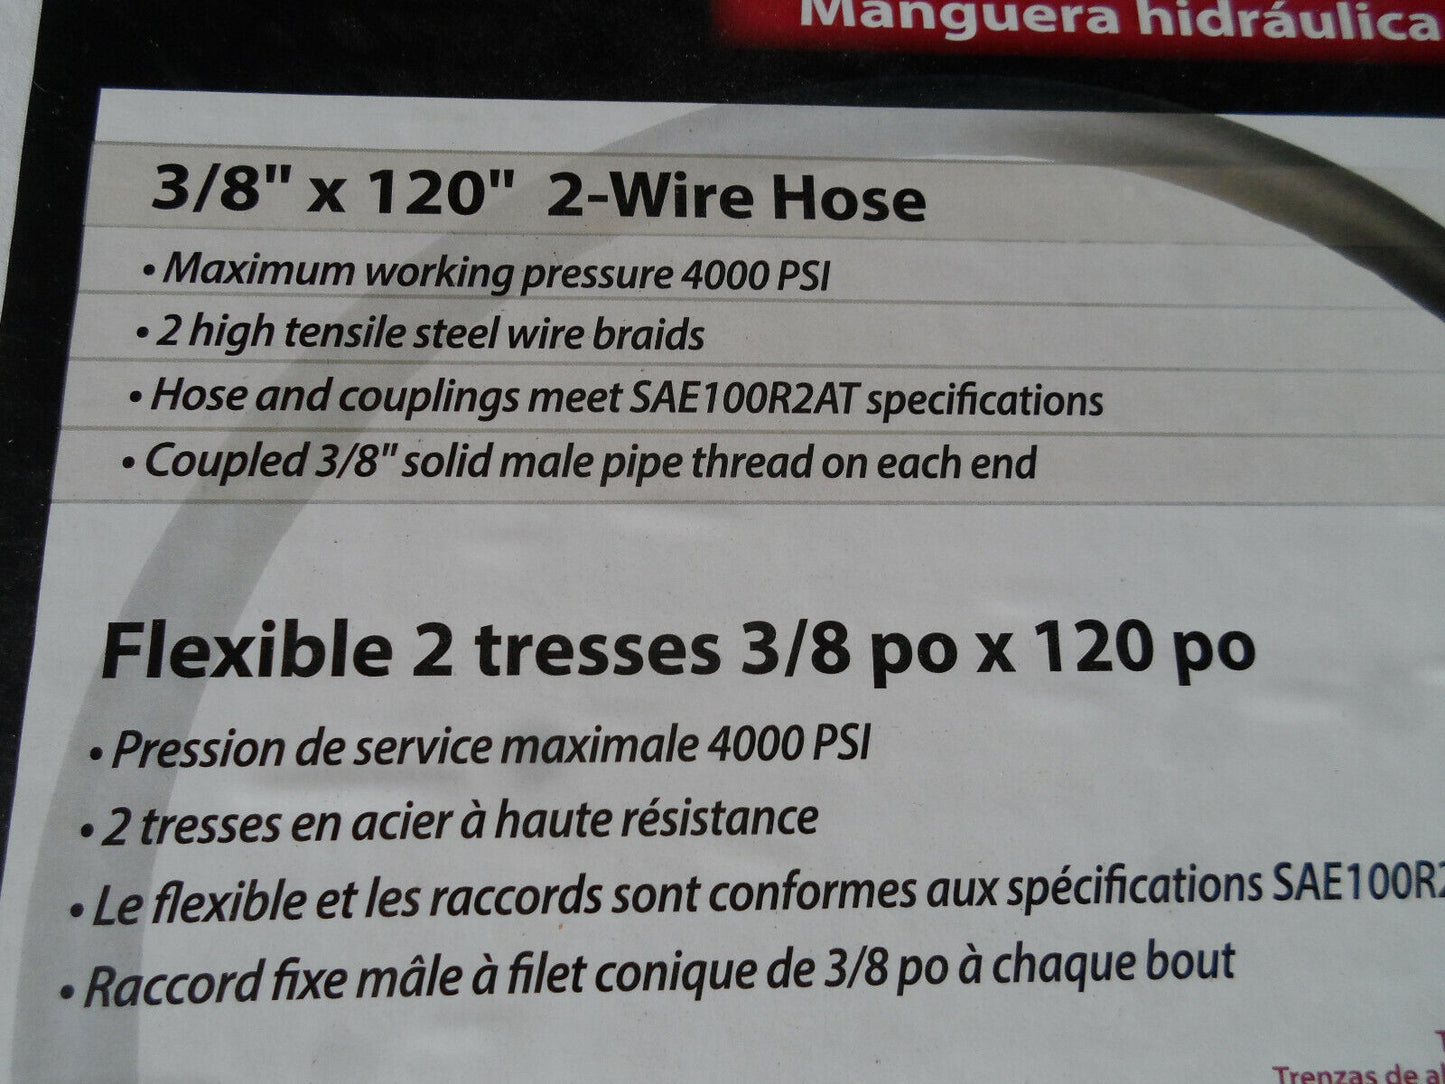 Hydraulic Hose 3/8" x 120" inch  2-Wire 3500 PSI